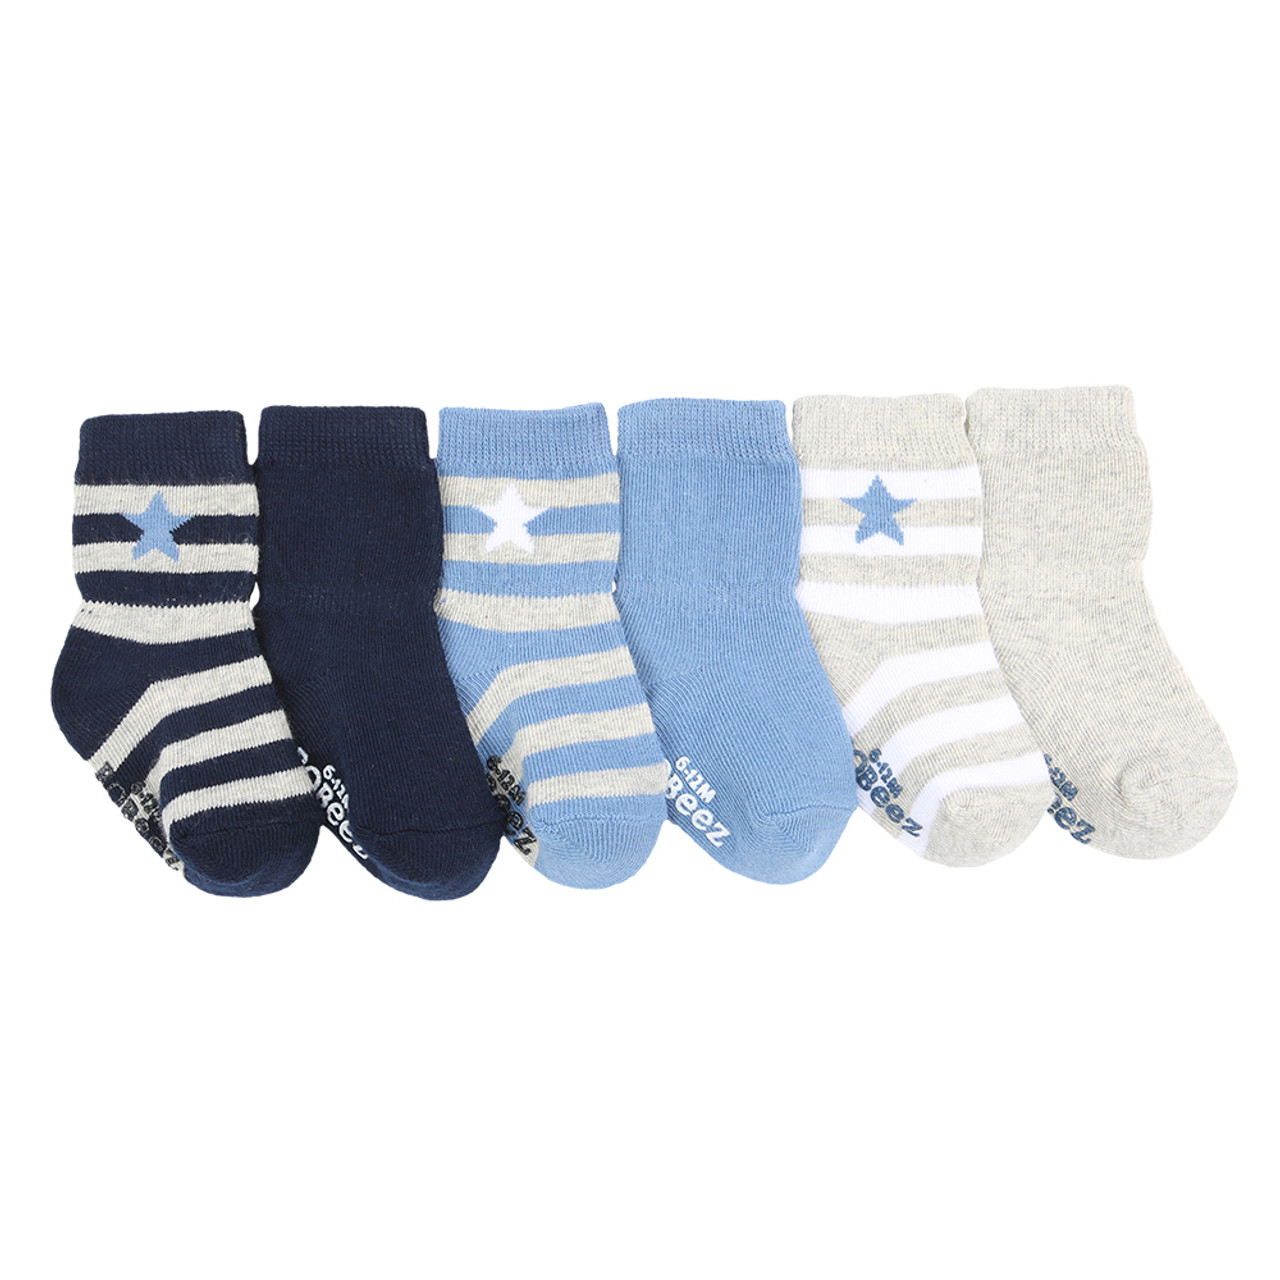 Rugby Star Baby Socks, 6 Pack | Robeez